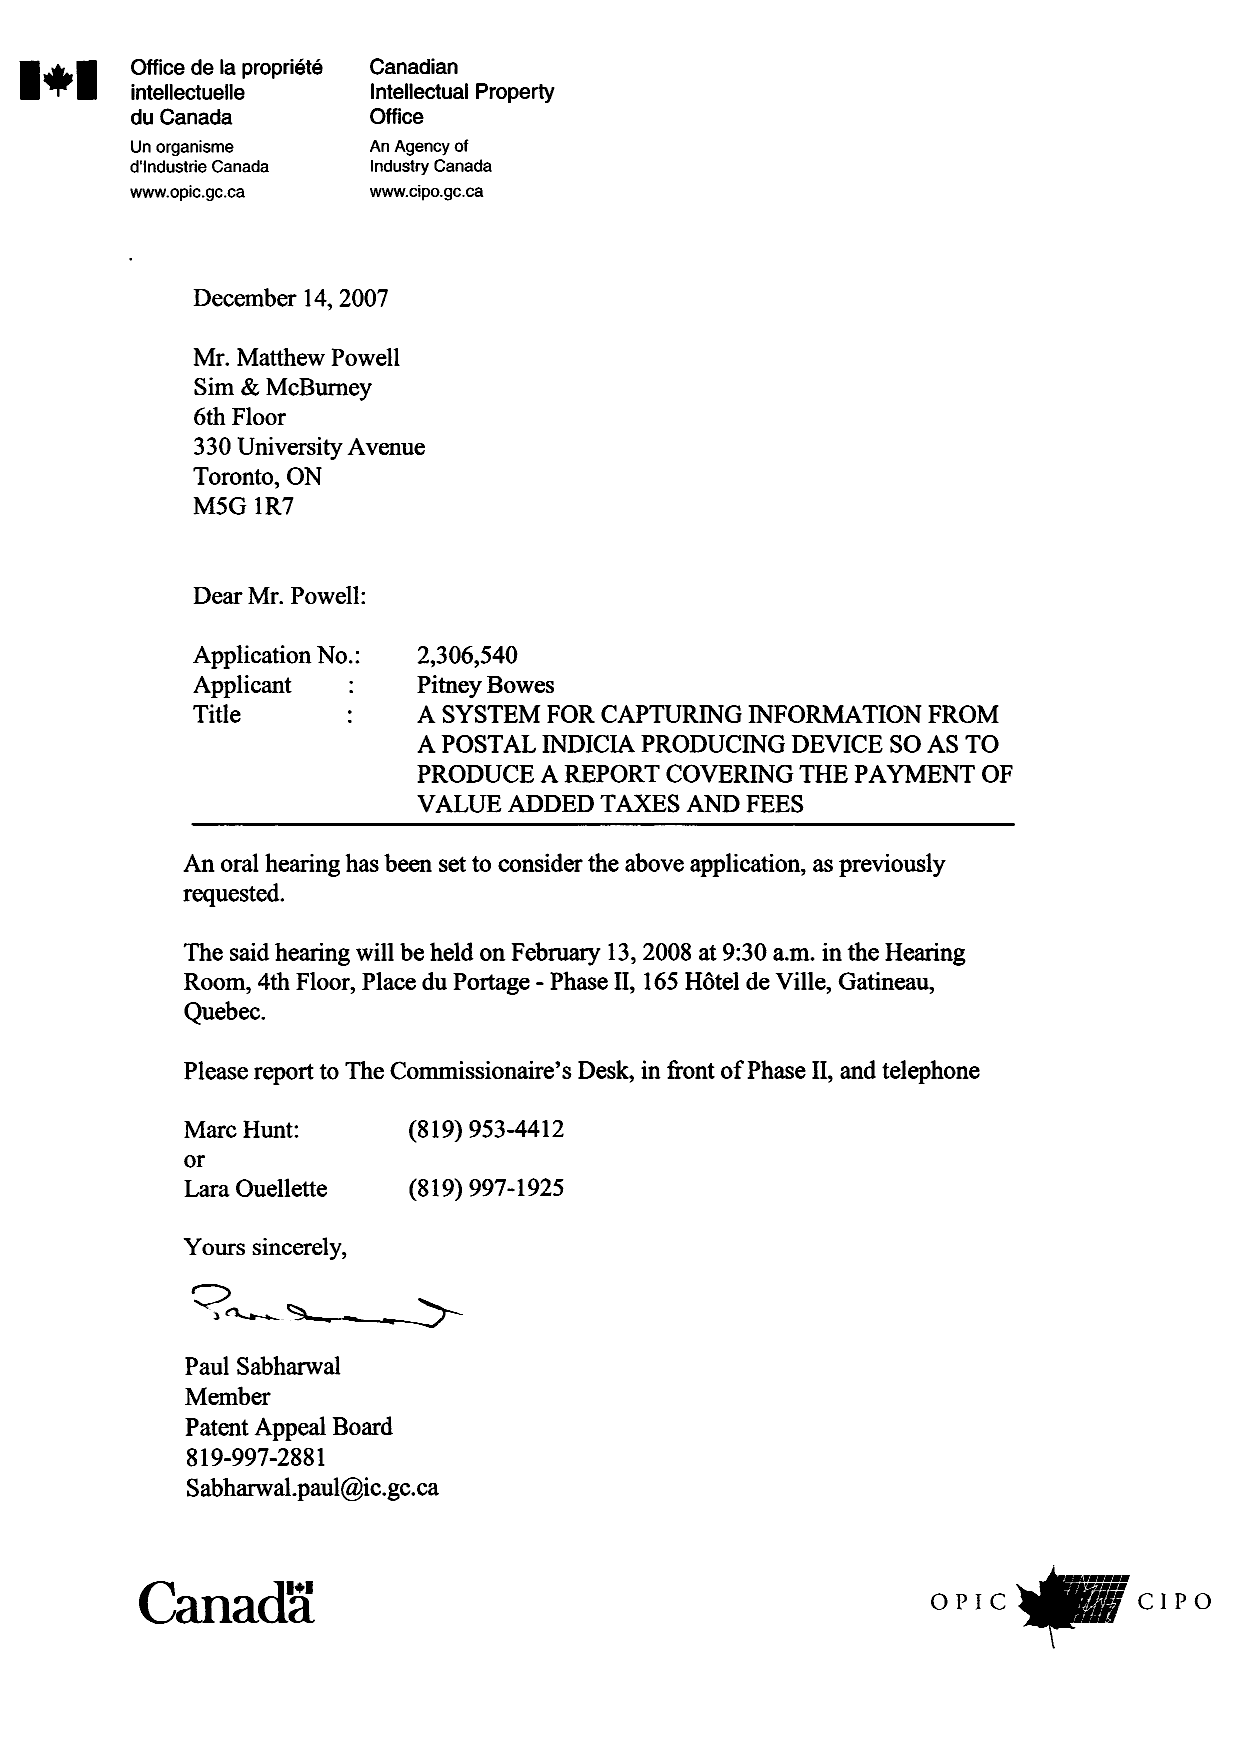 Canadian Patent Document 2306540. Correspondence 20071214. Image 1 of 1